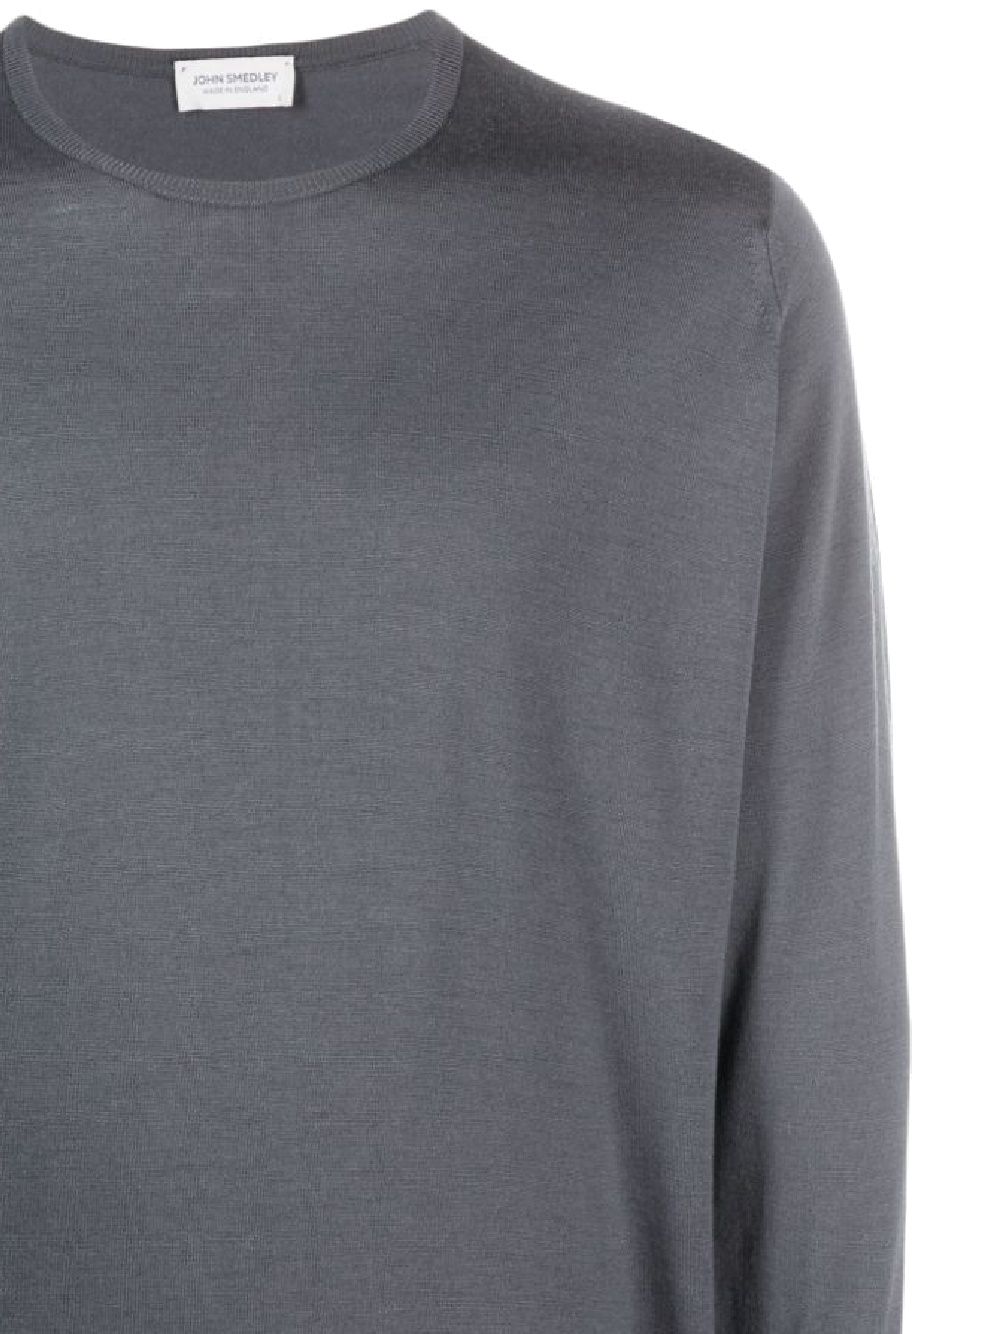 John Smedley Shirts Slate grey